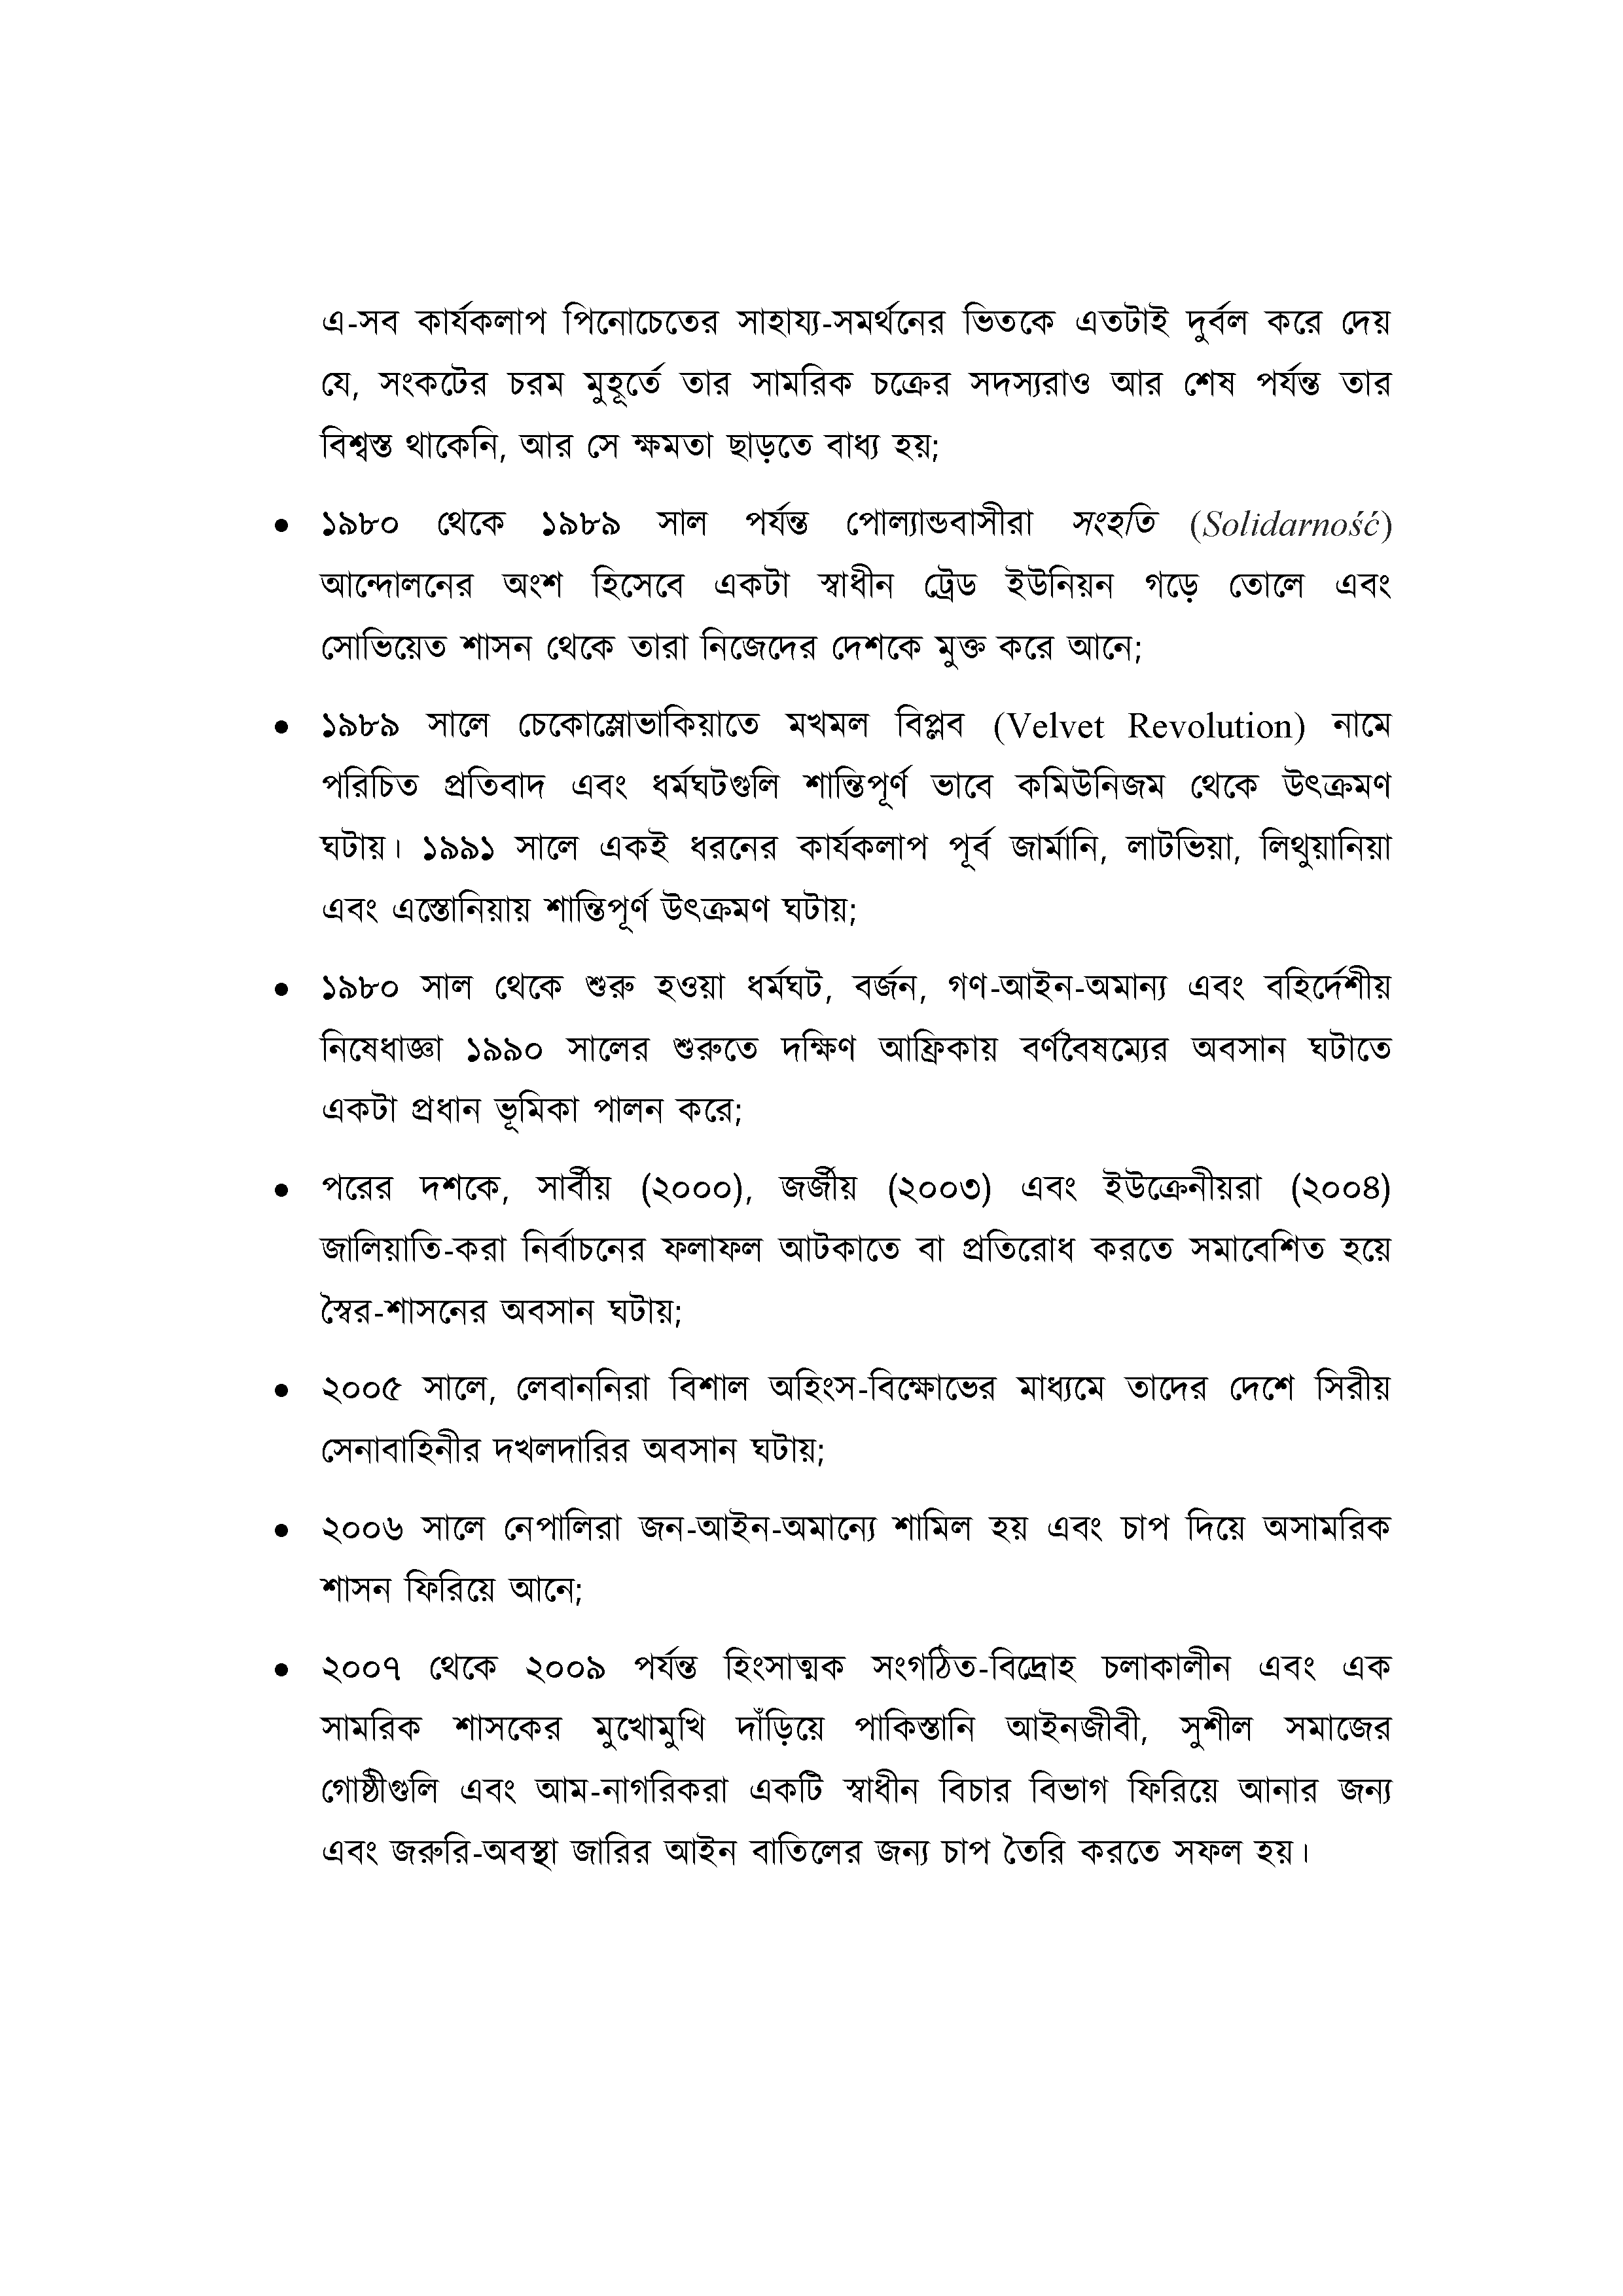 The Trifecta of Civil Resistance: Unity, Planning, Discipline (Bangla)